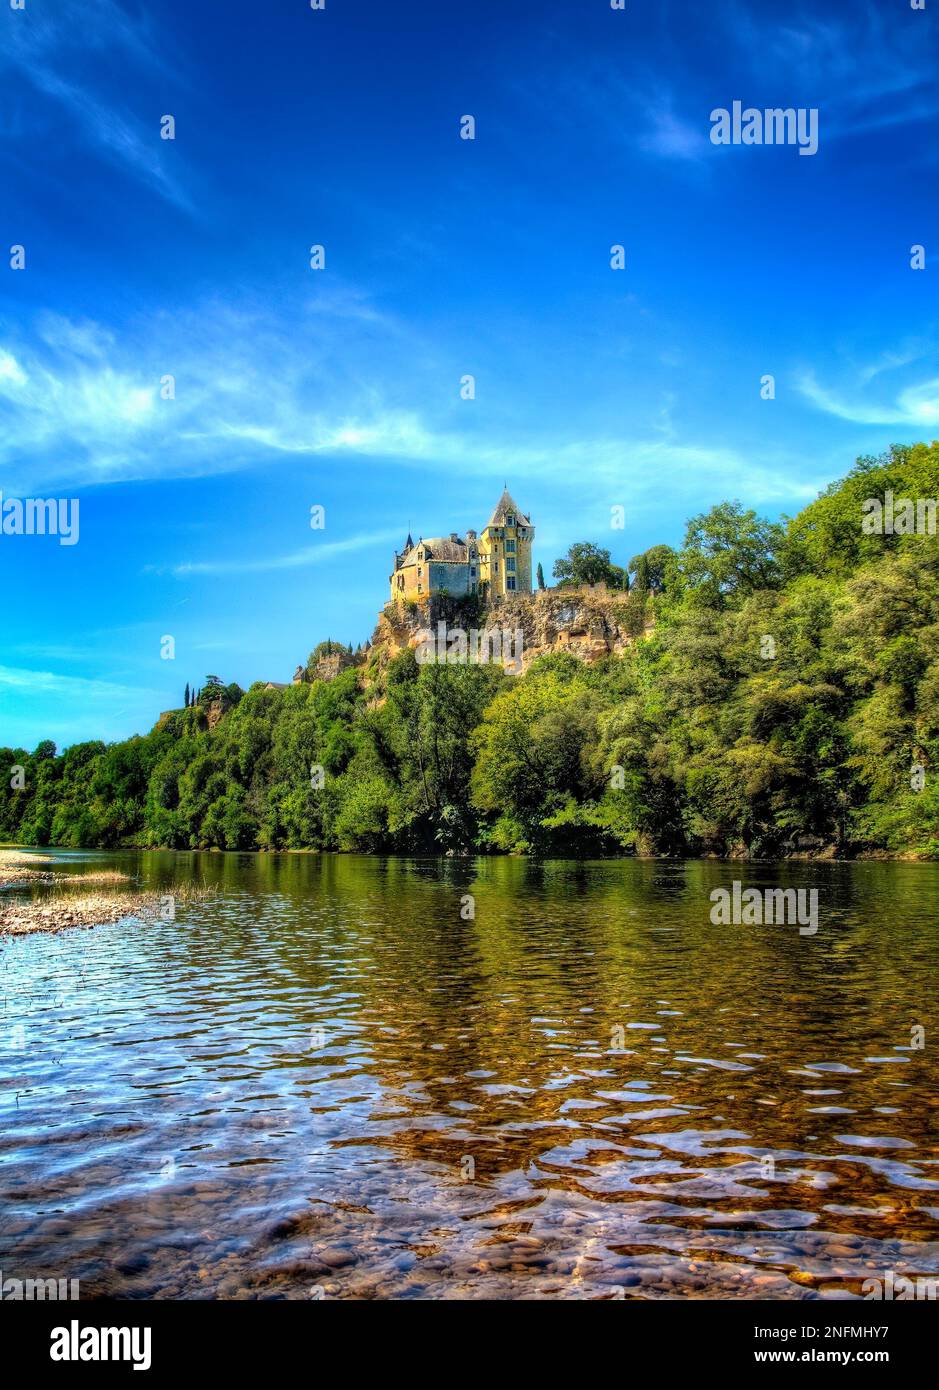 Chateau de Montfort on a Cliff by the River Dordogne Stock Photo